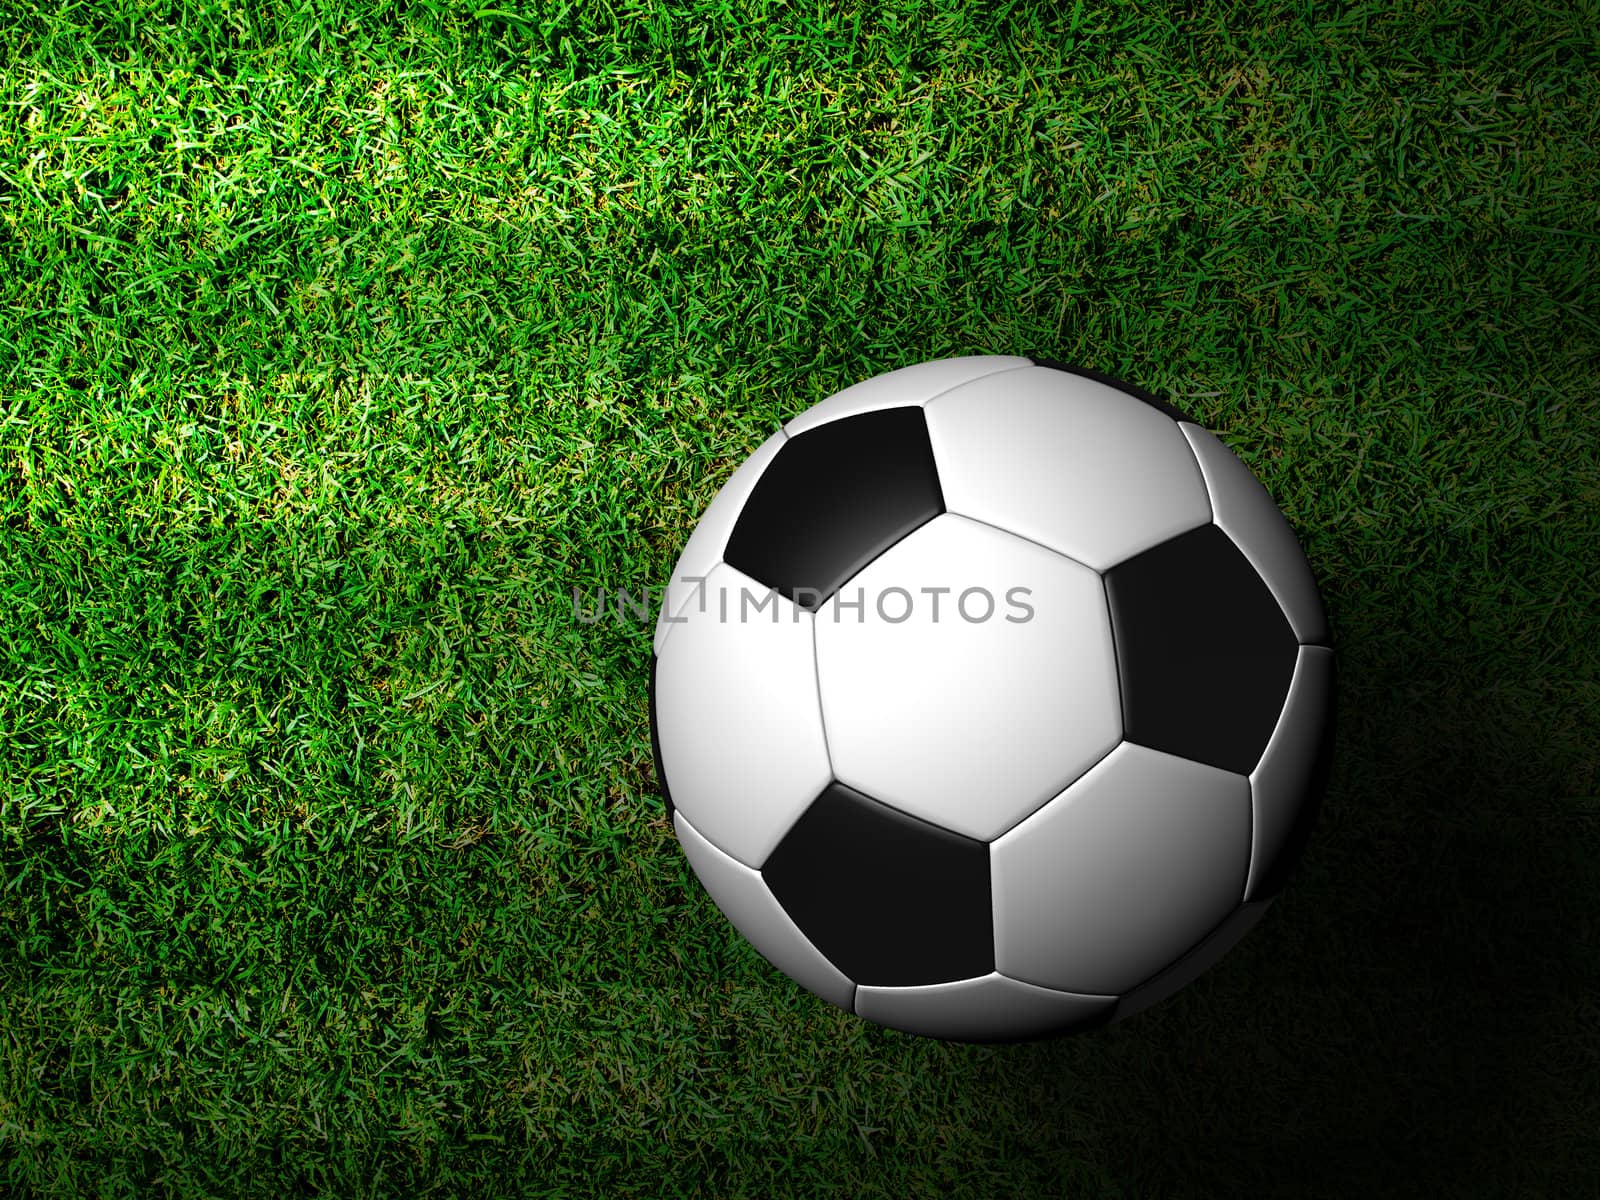 3d rendering of a soccer ball in green grass